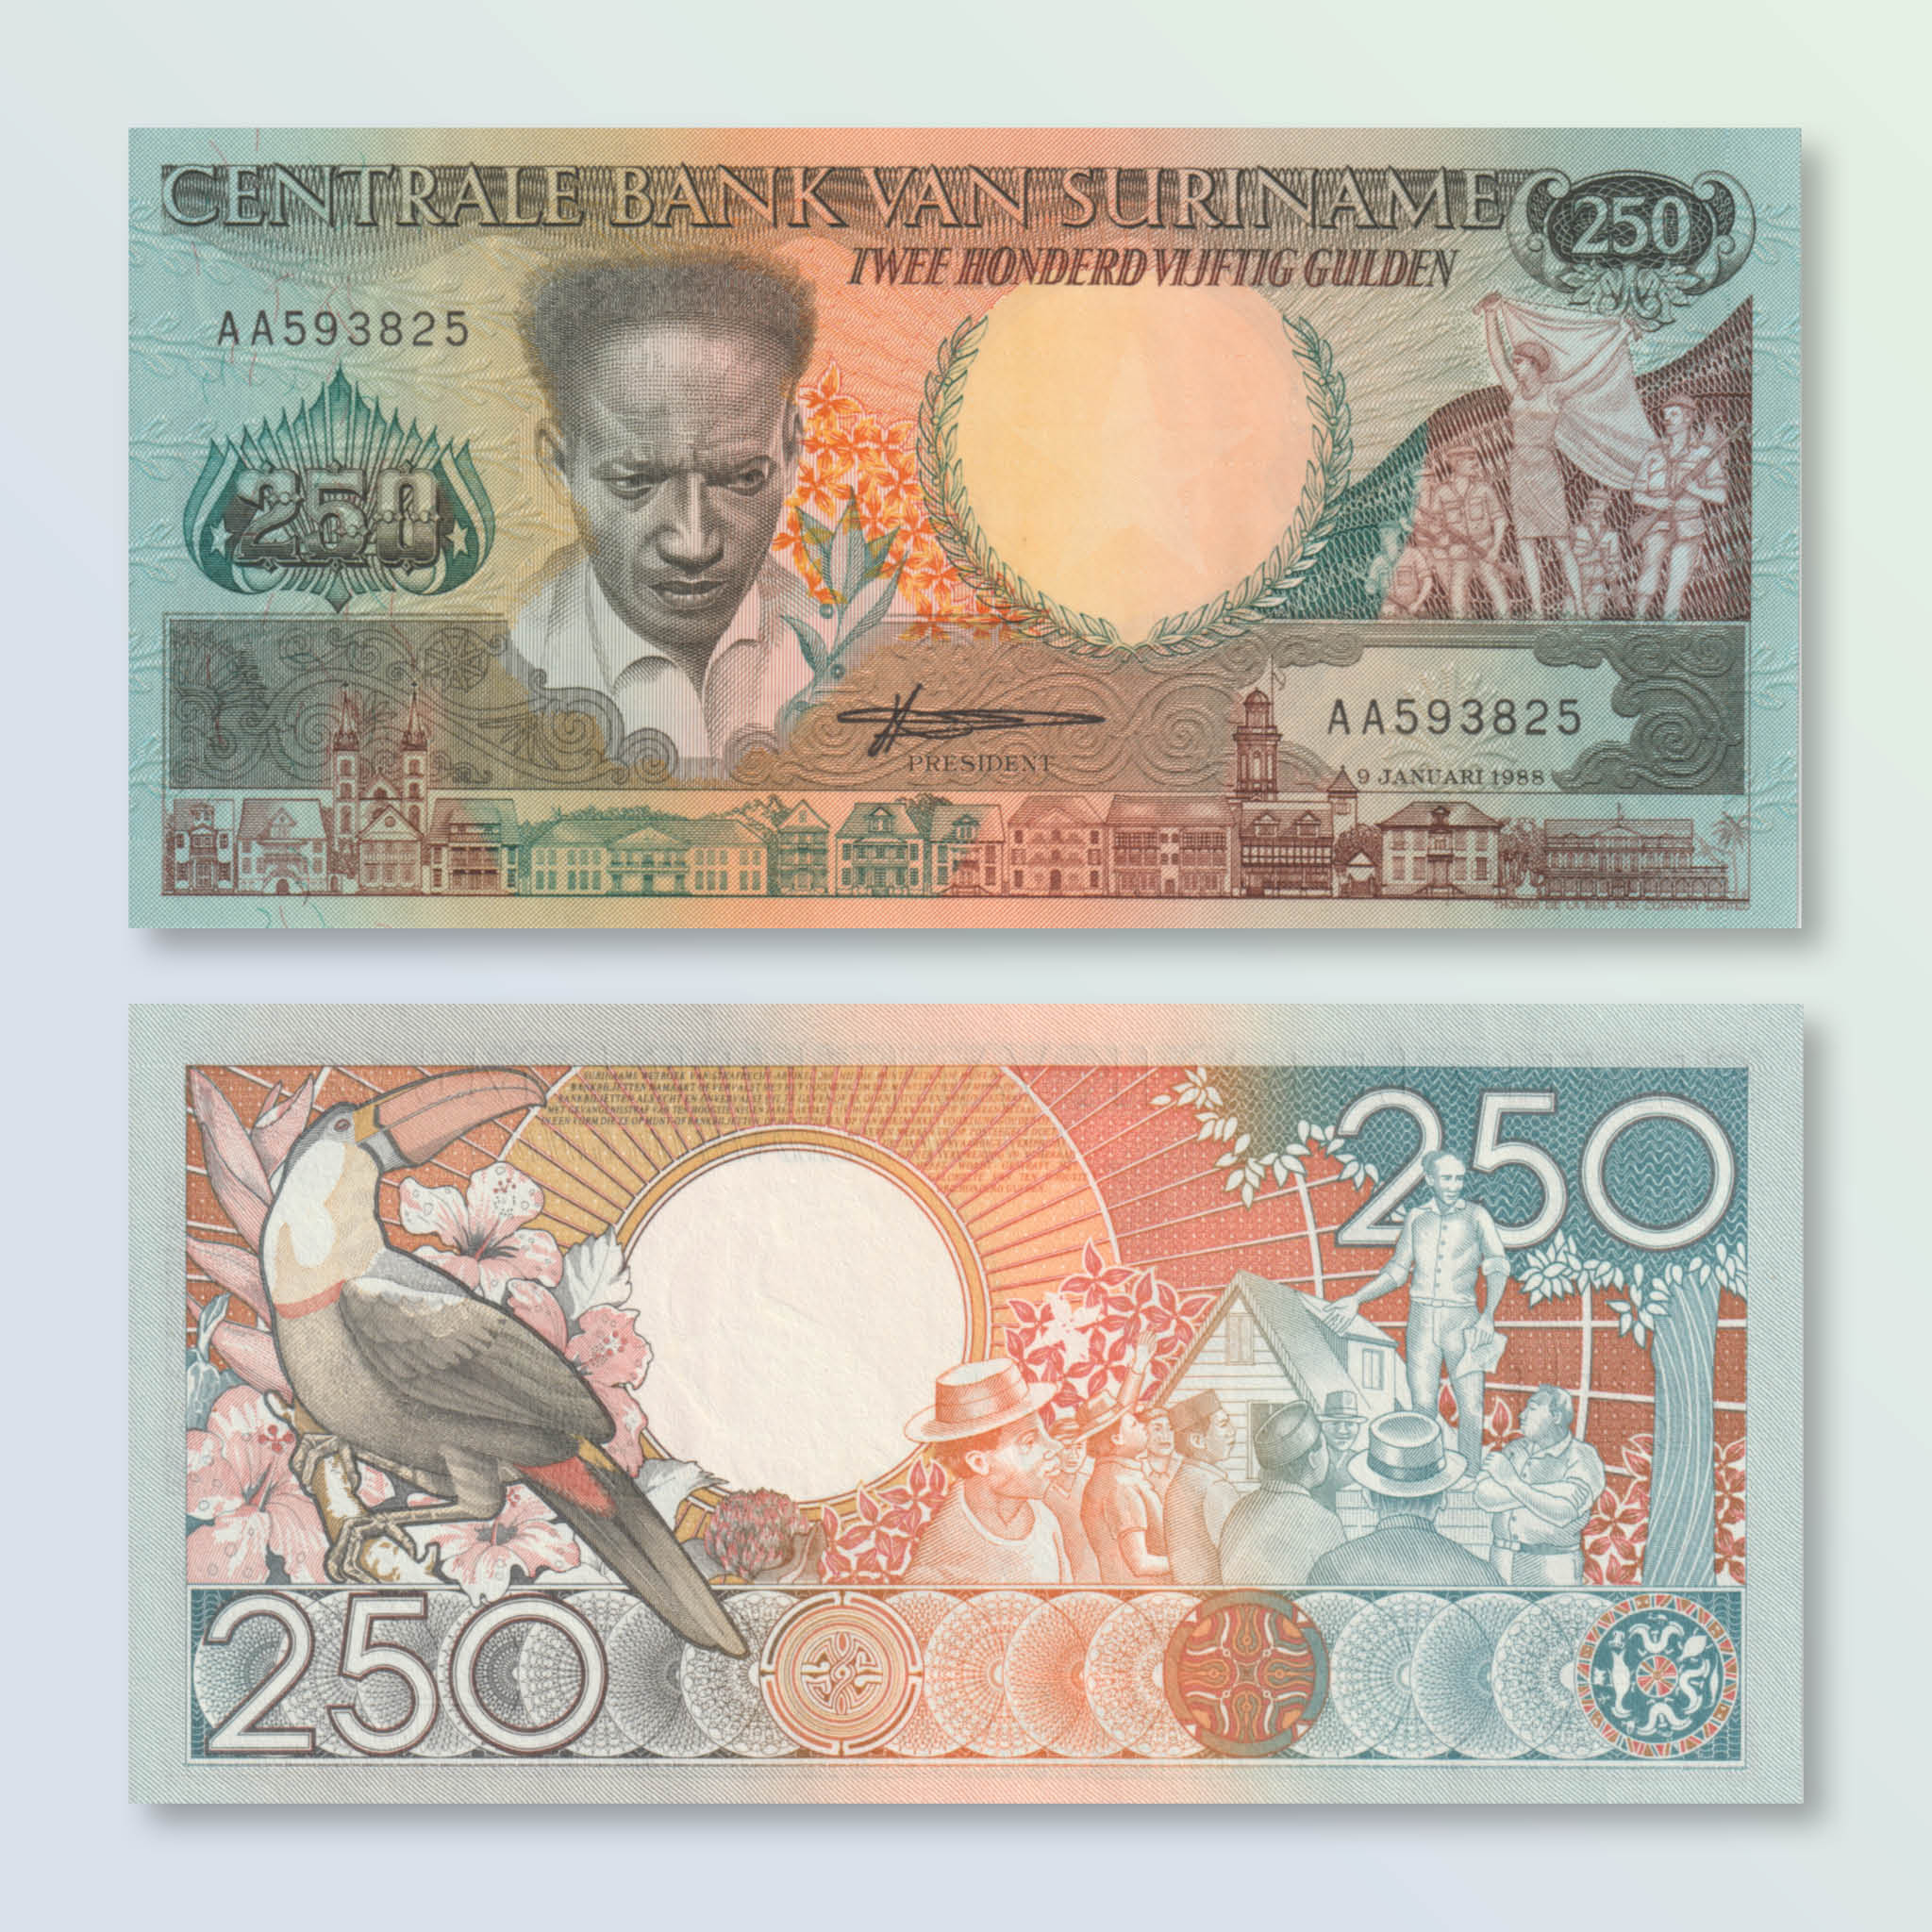 Suriname 250 Gulden, 1988, B520a, P134, UNC - Robert's World Money - World Banknotes